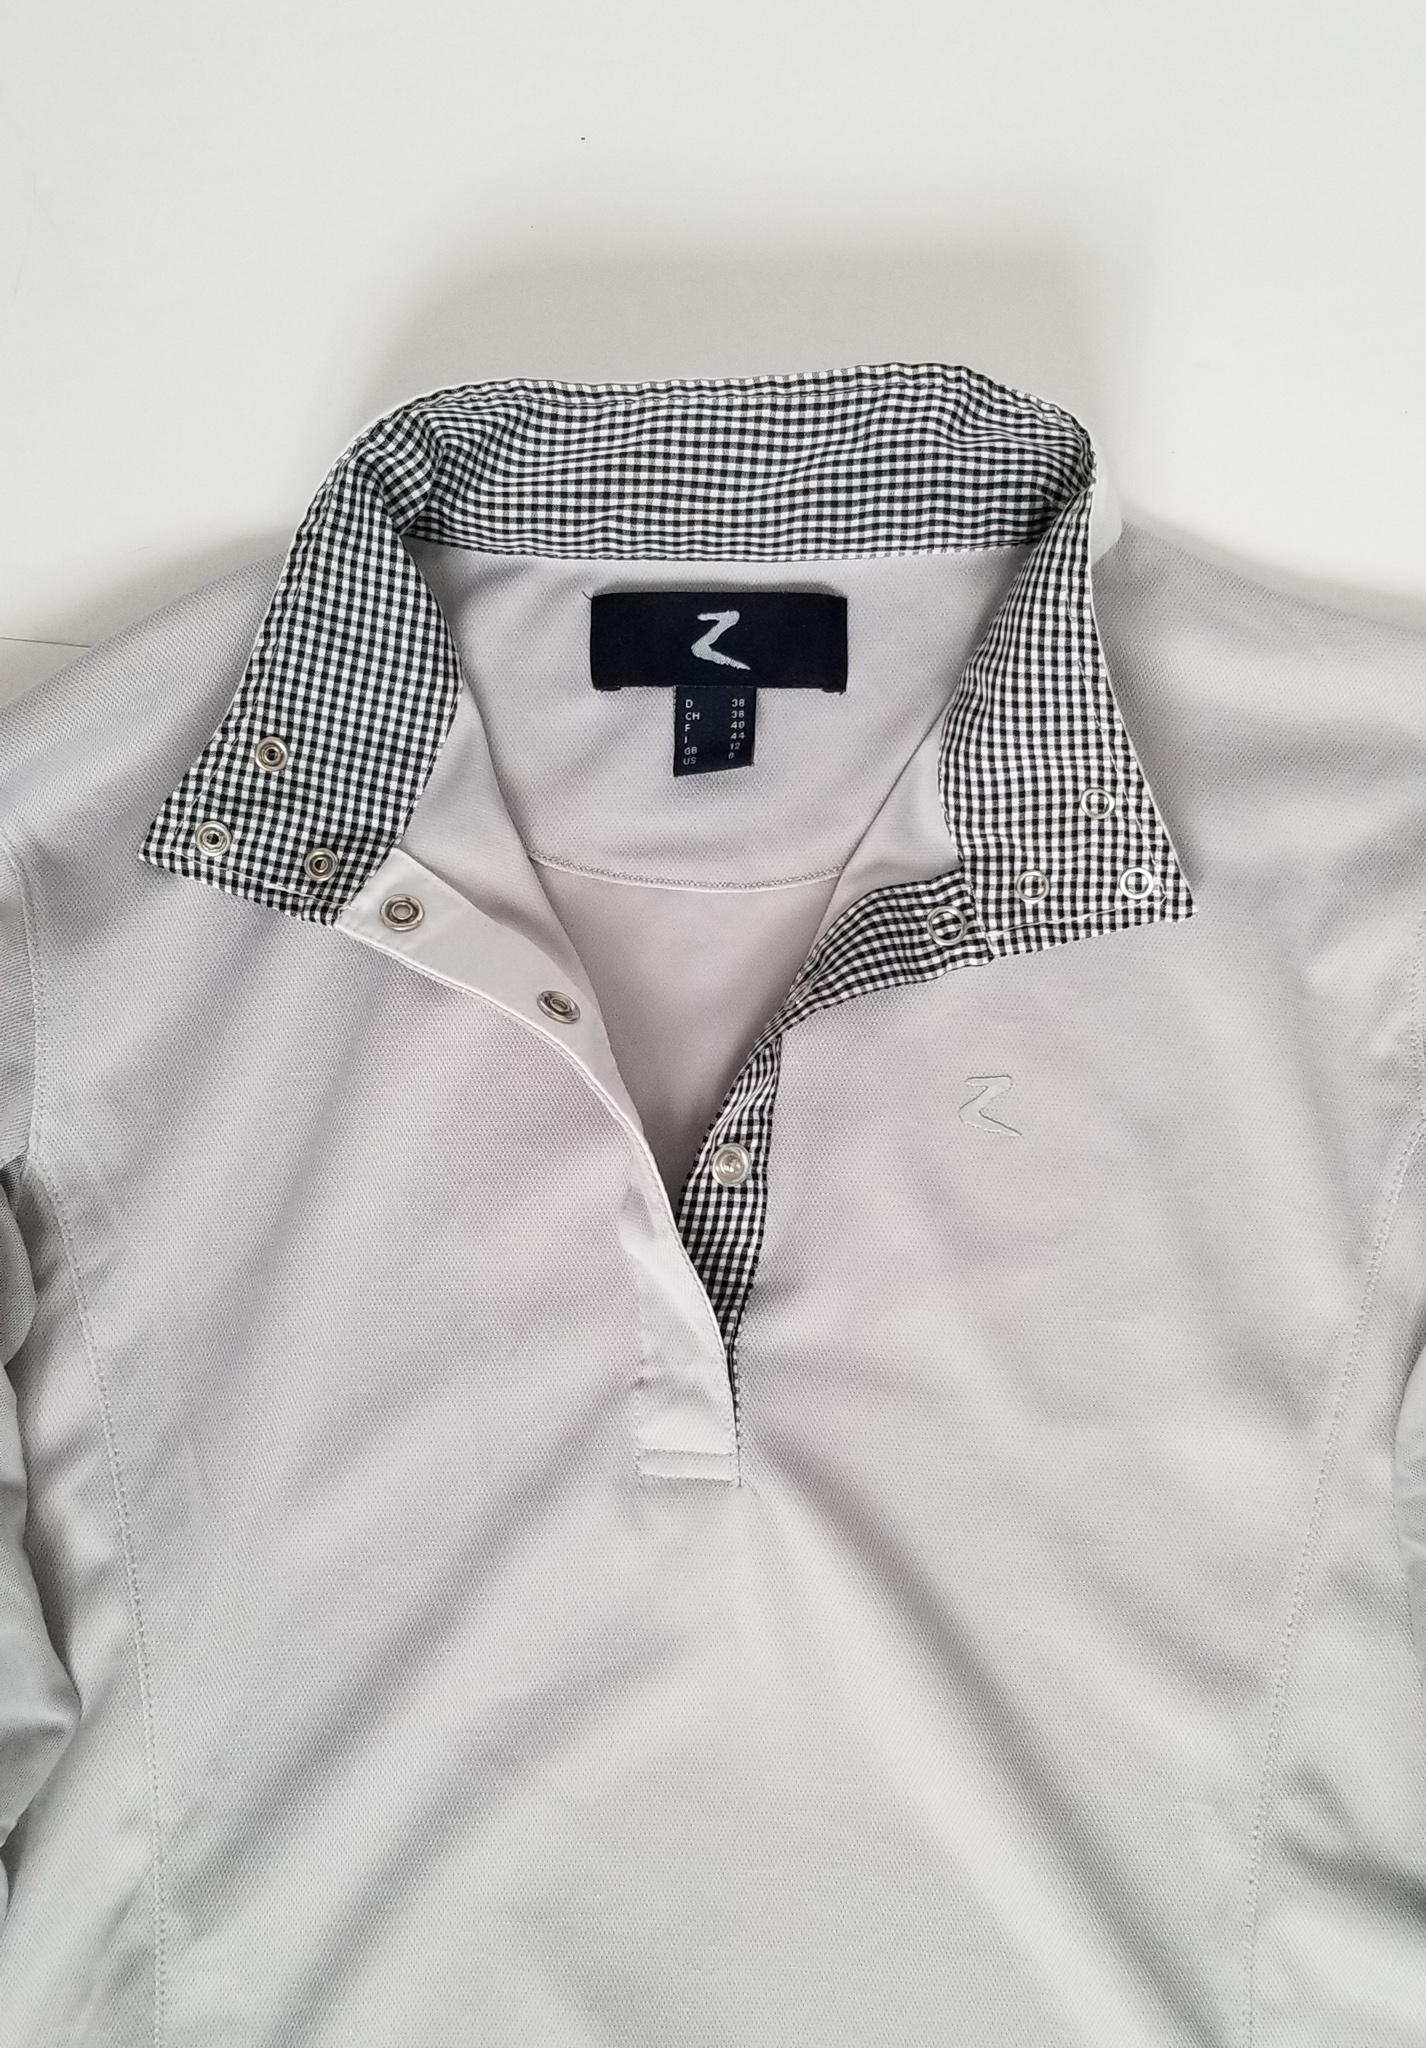 Horze Blaire Long Sleeve Show Shirt- Grey - Women's Size 8 (Small)